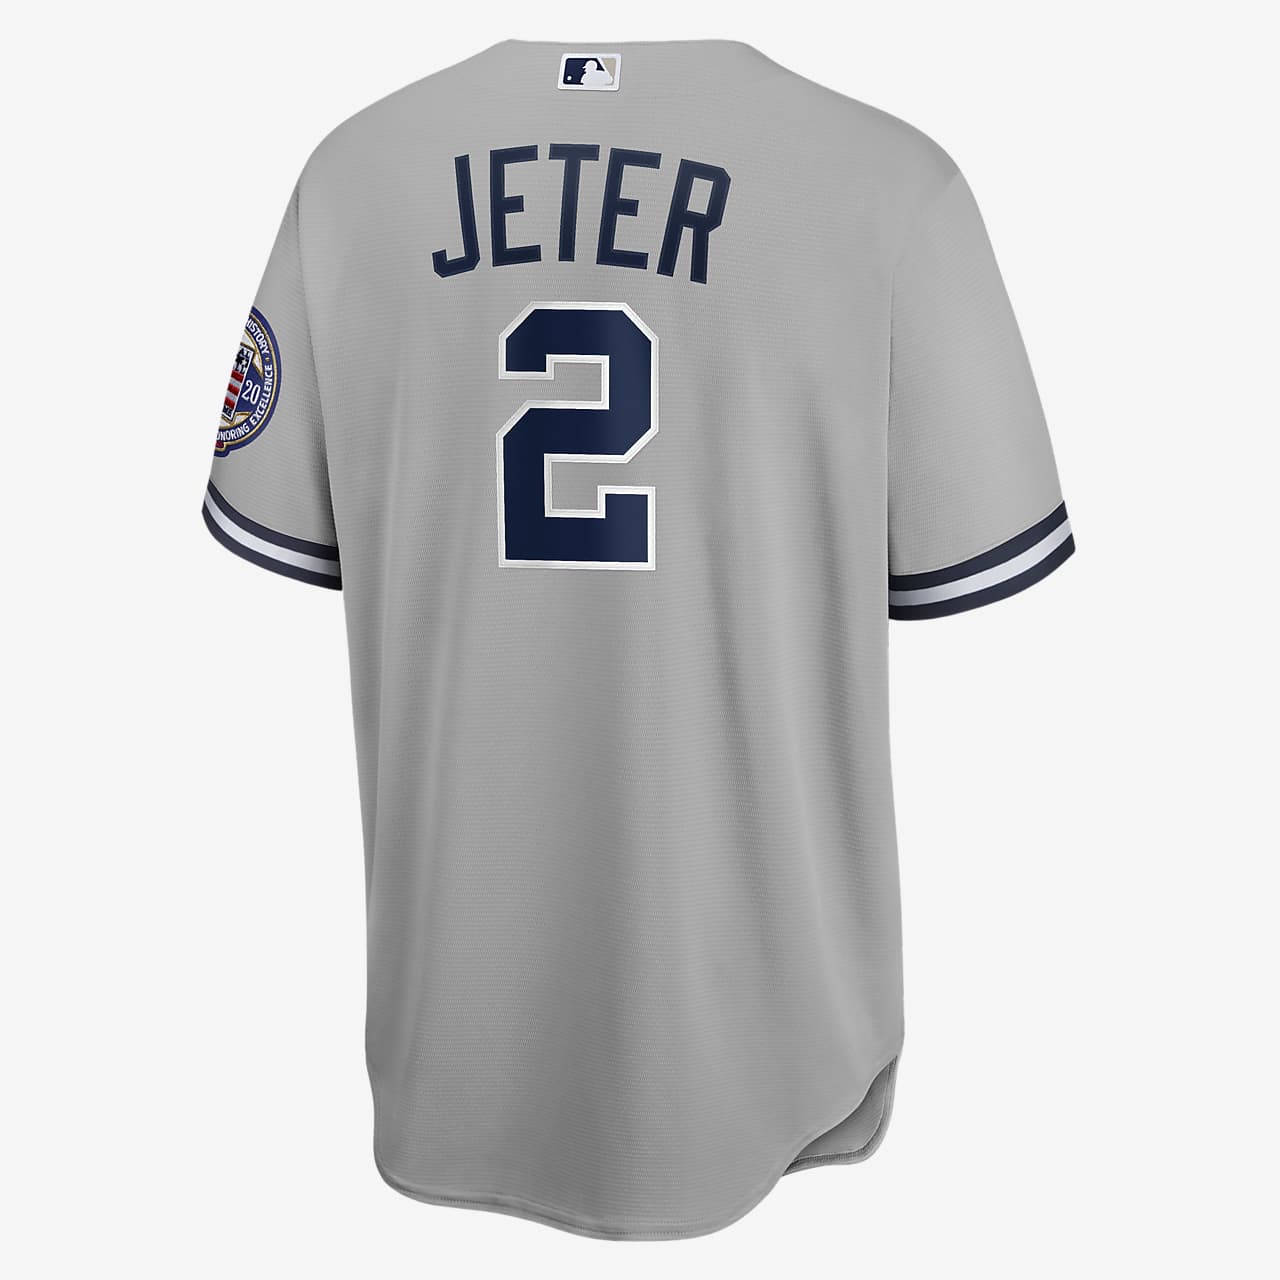 Camiseta de béisbol Replica para hombre MLB New York Yankees Hall of Fame Induction (Derek Jeter). Nike.com